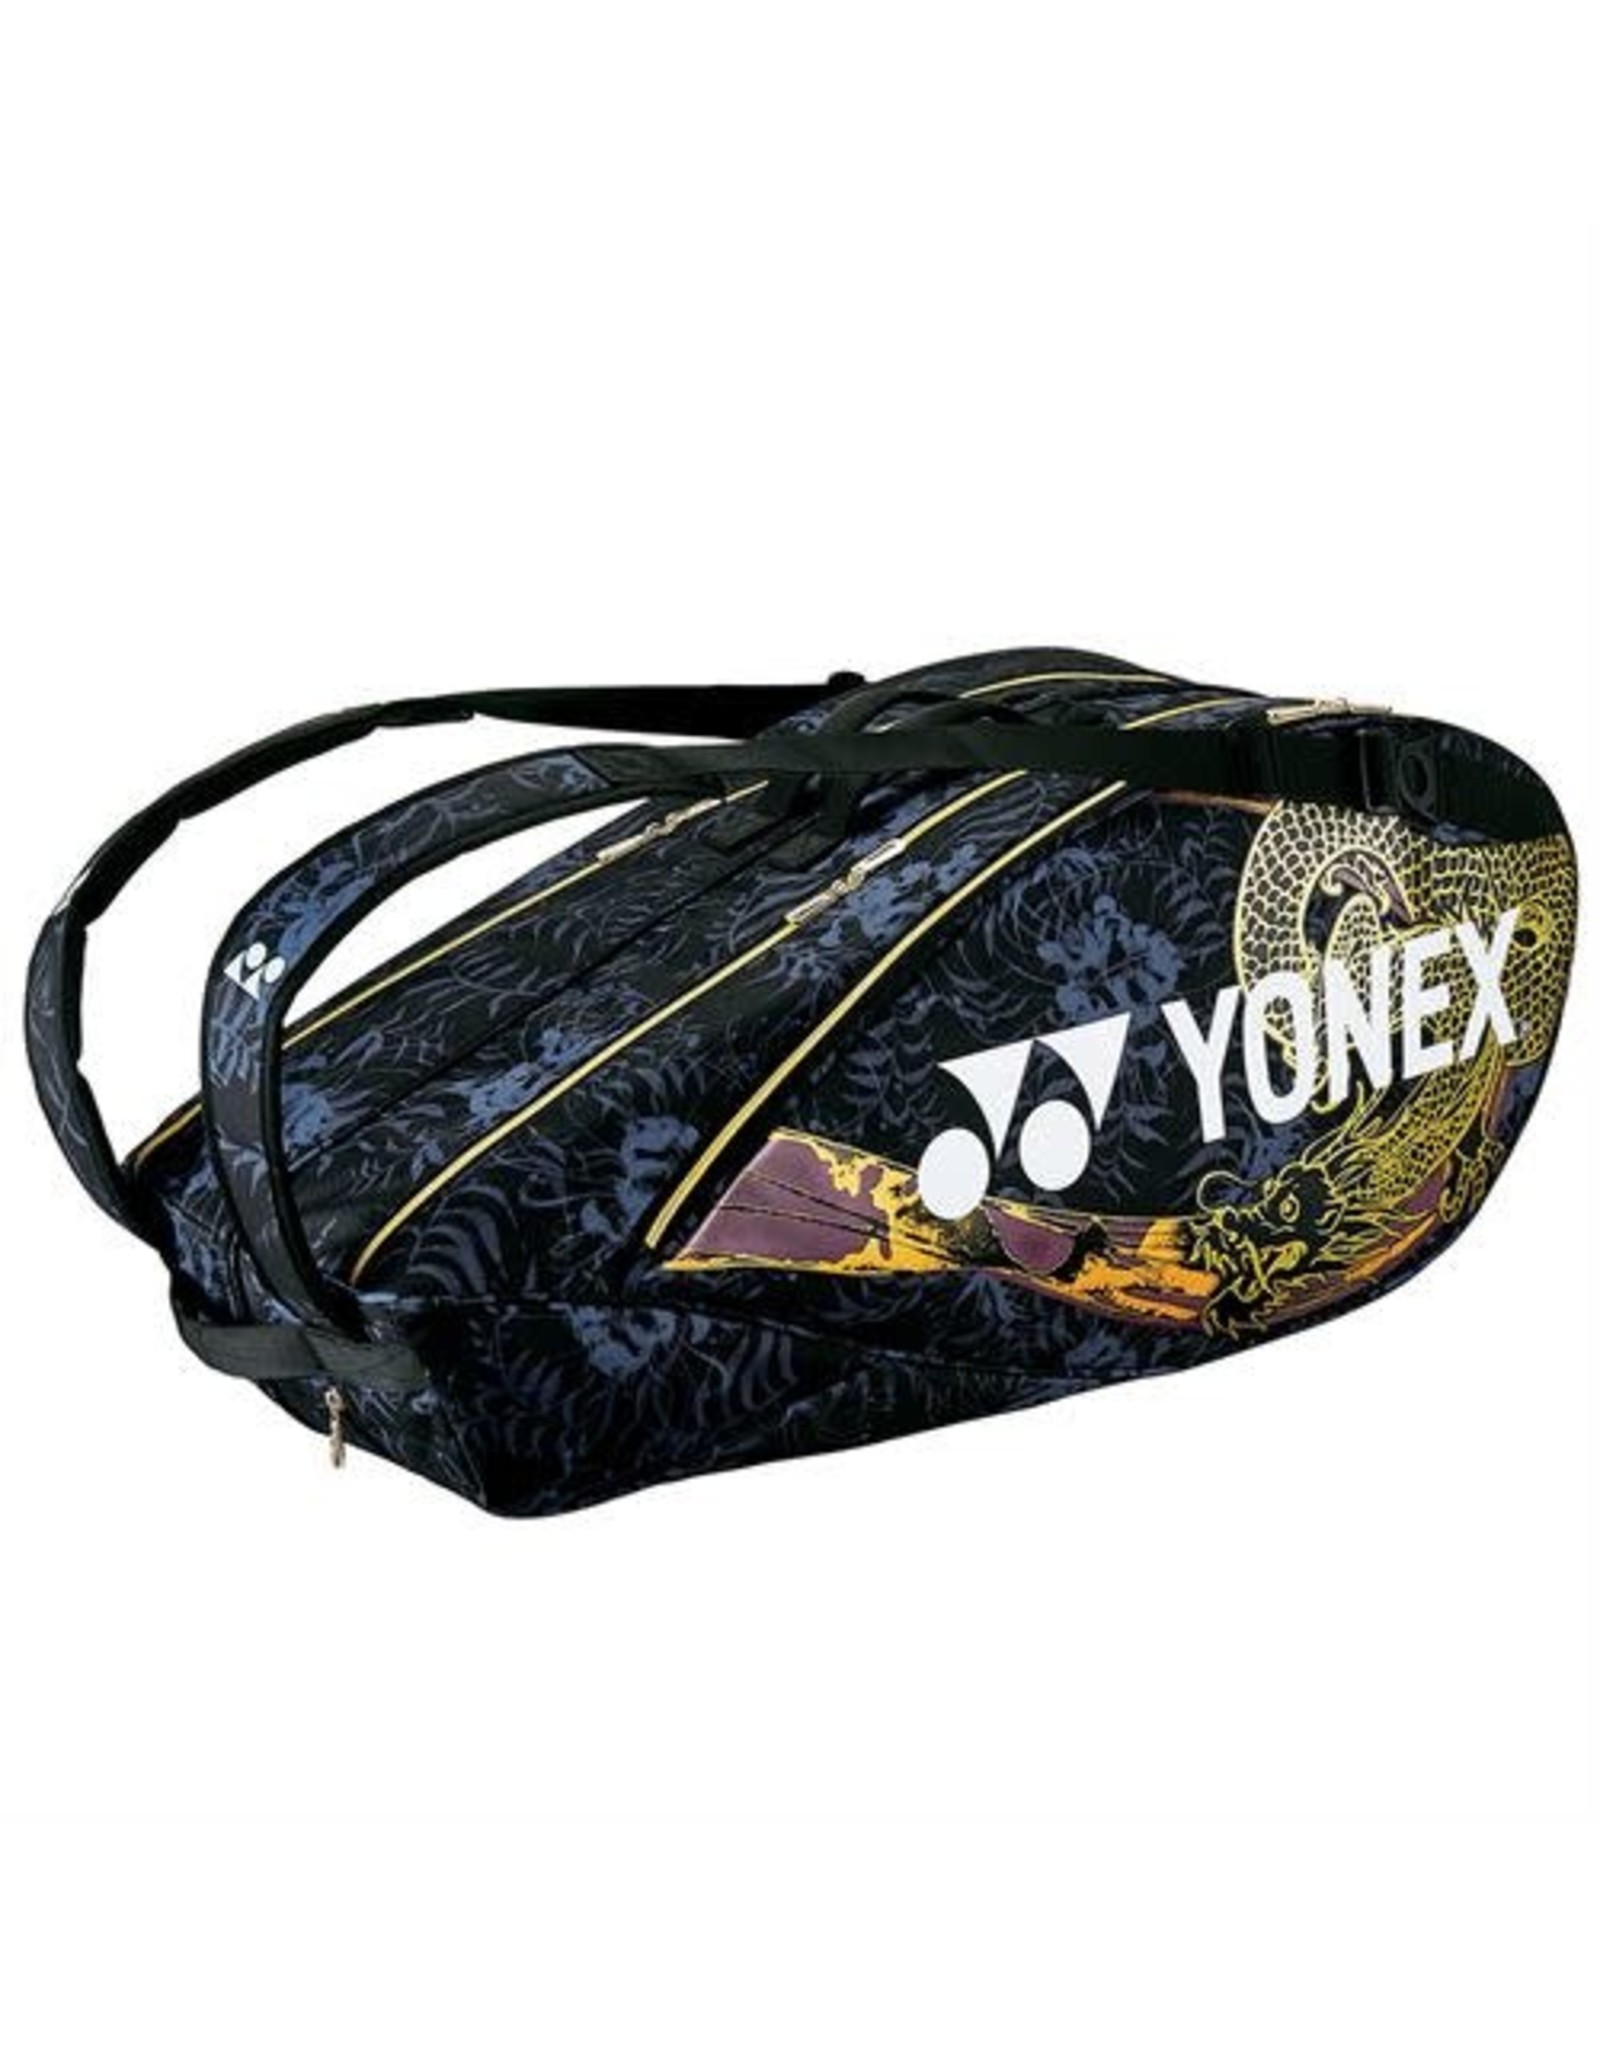 Yonex Yonex Osaka Pro 6 Racquet Bag LE